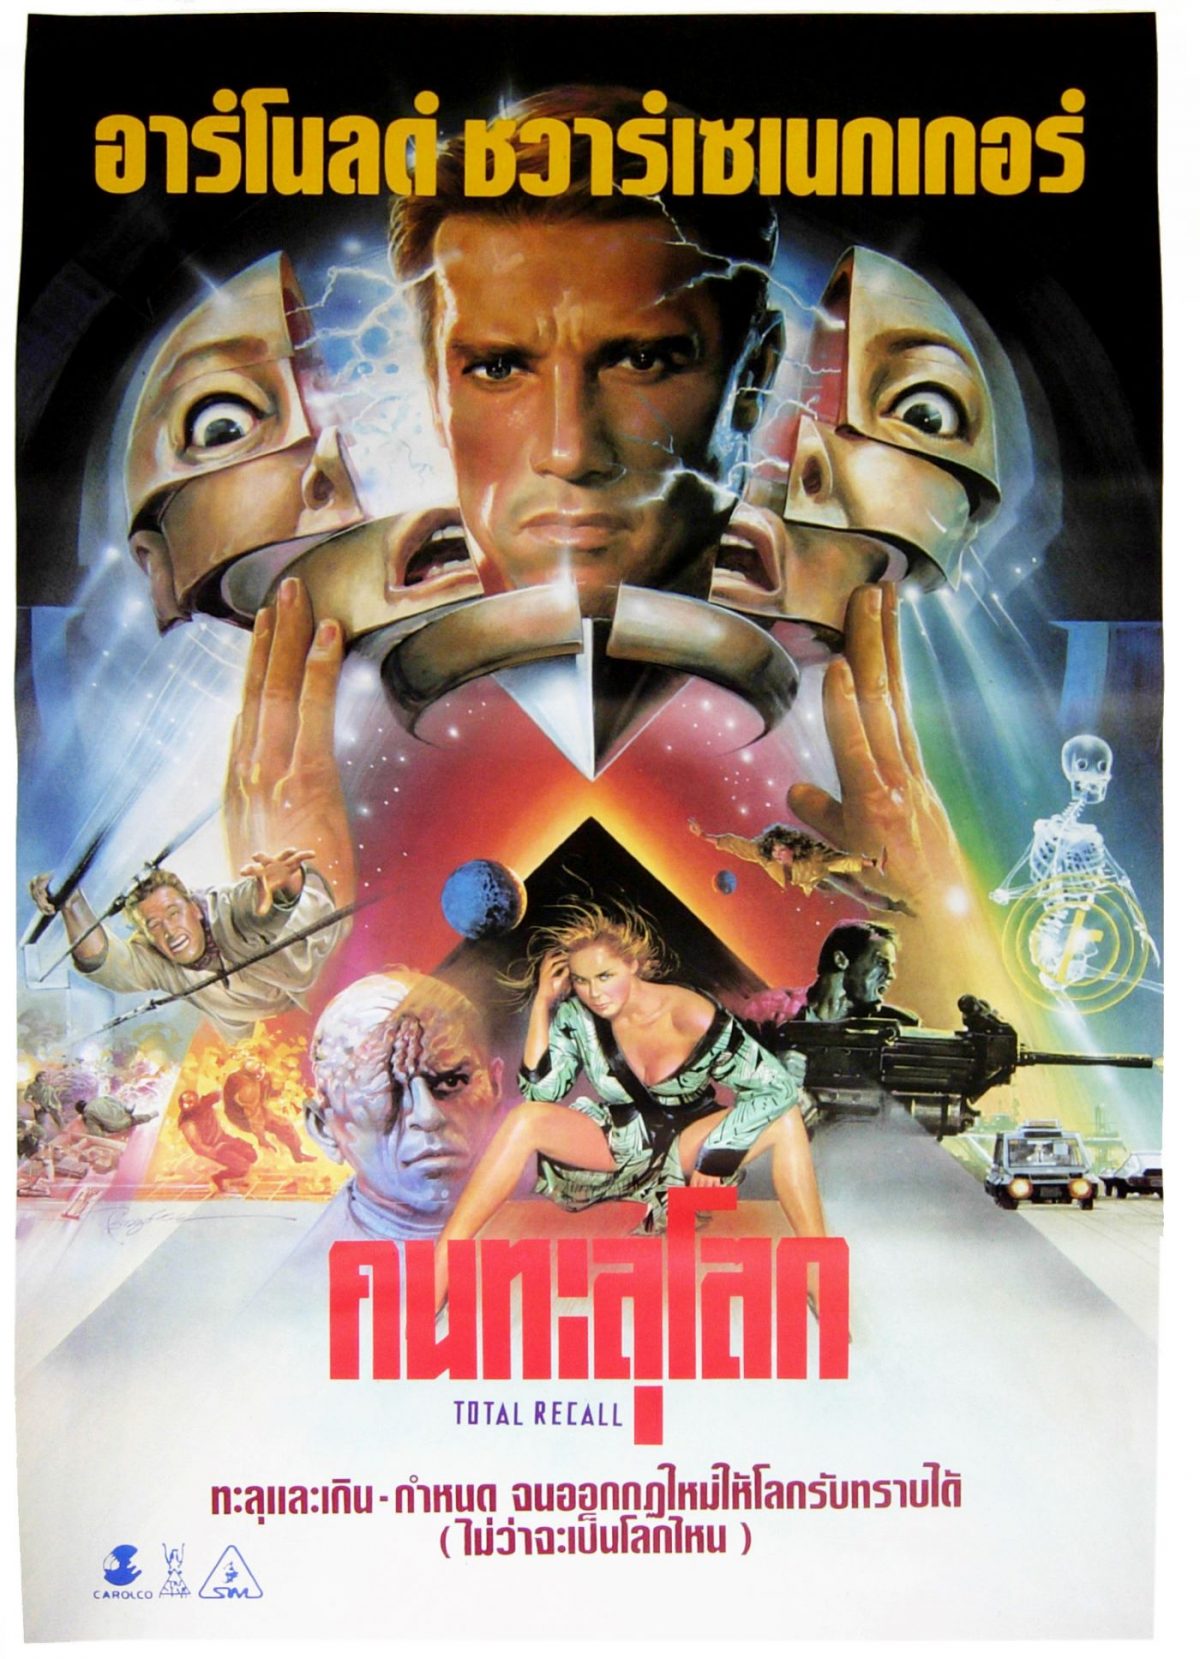 Thailand, movie posters, artwork, Total Recall, Arnold Schwarzenegger